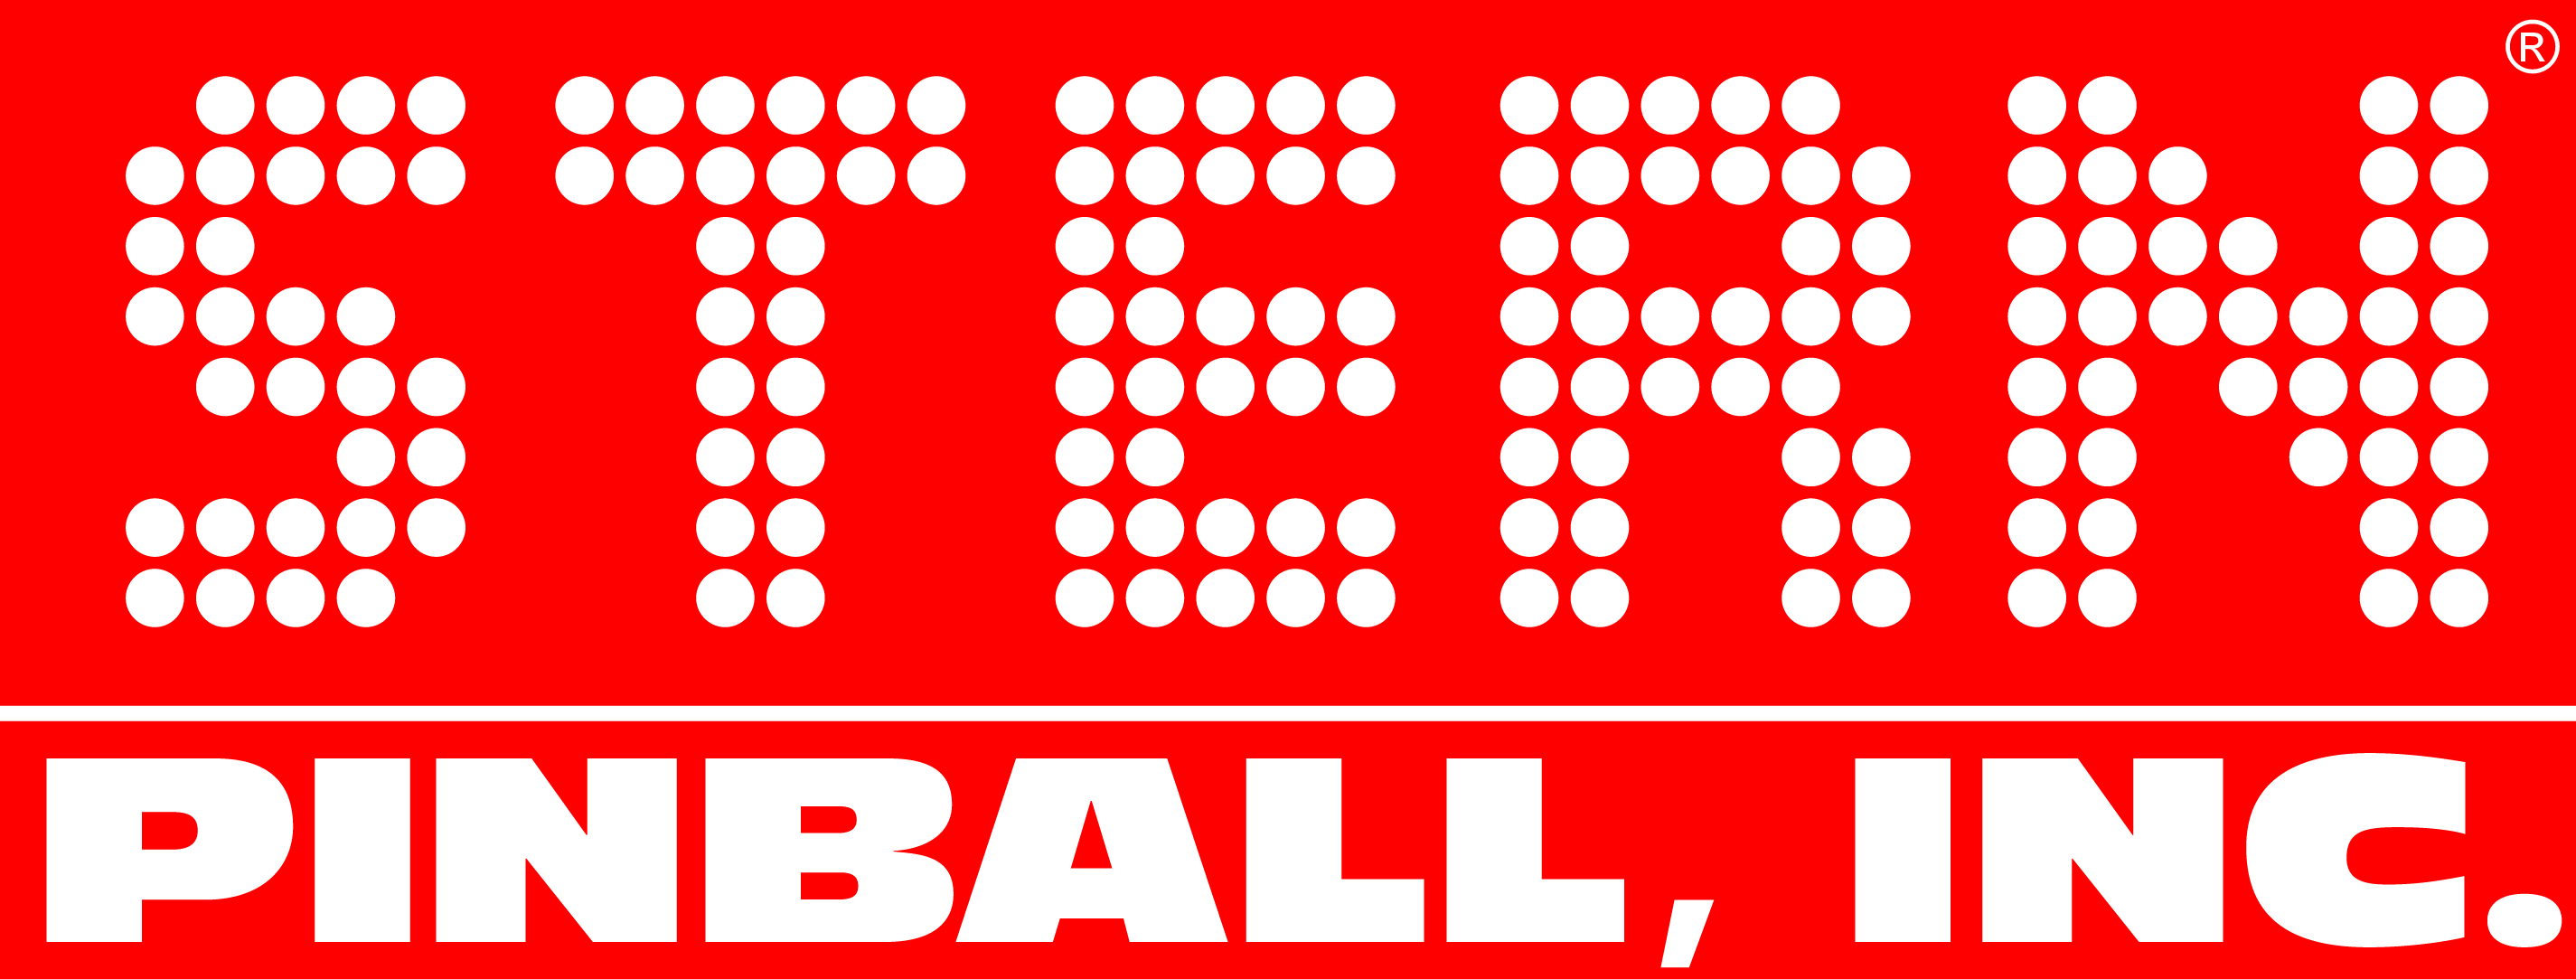 Pinball Logo - New Stern, old Gottlieb, and old Taito company logos - PinballX ...